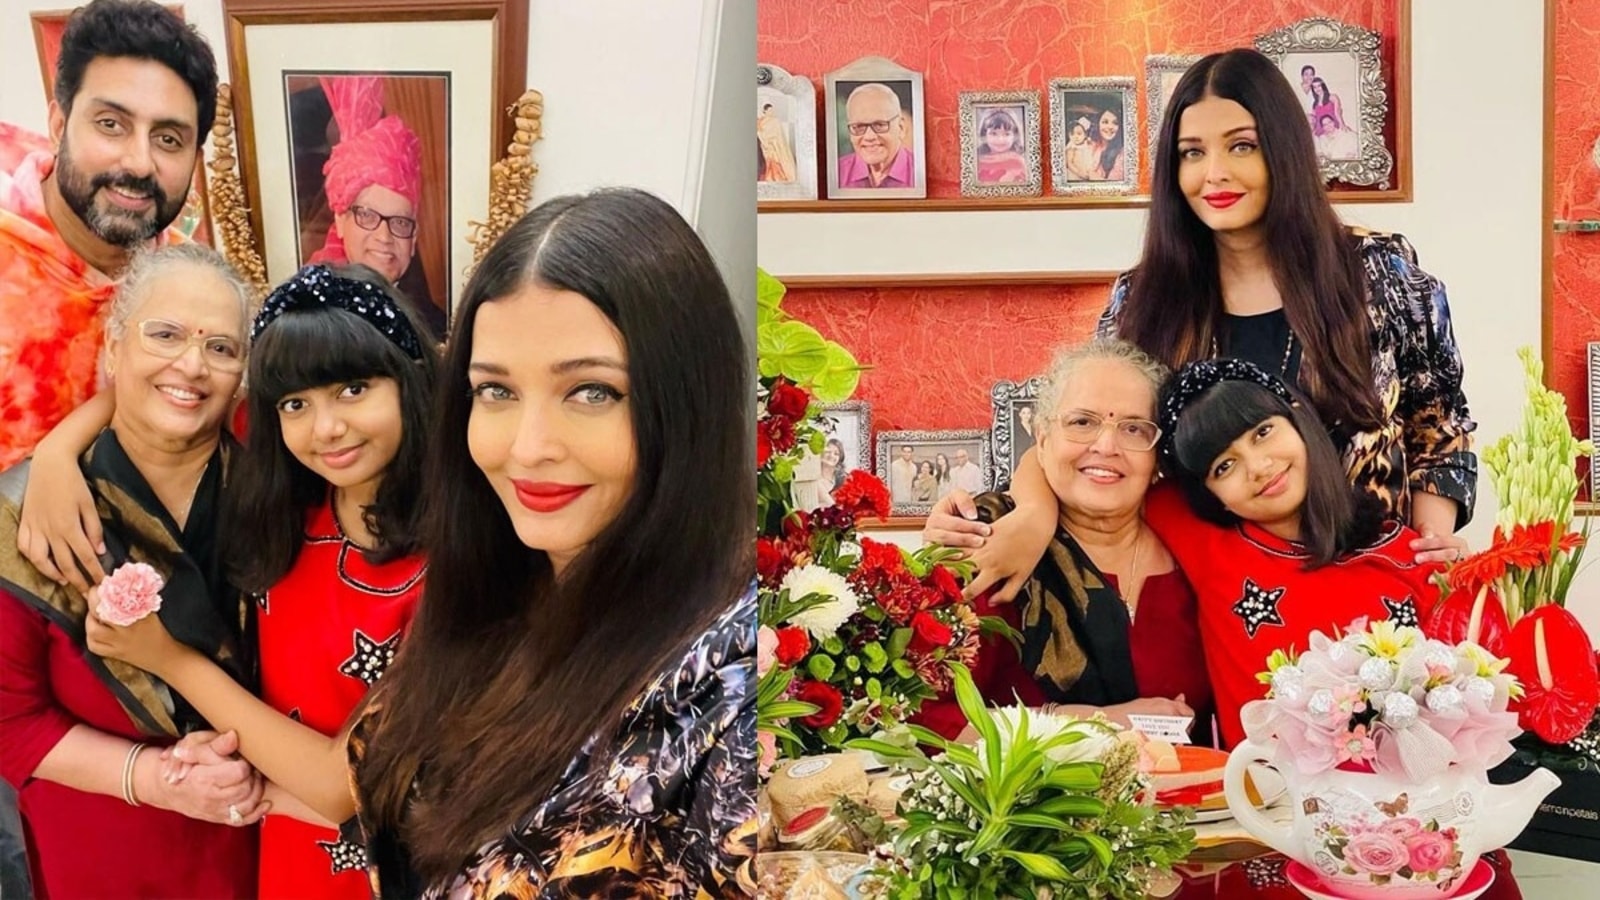 Abhishek Bachchan Ki Wife Sex Chudai Ke Hd Vedieo - Aishwarya Rai wishes 'darling mommy' on her birthday, shares pics |  Bollywood - Hindustan Times